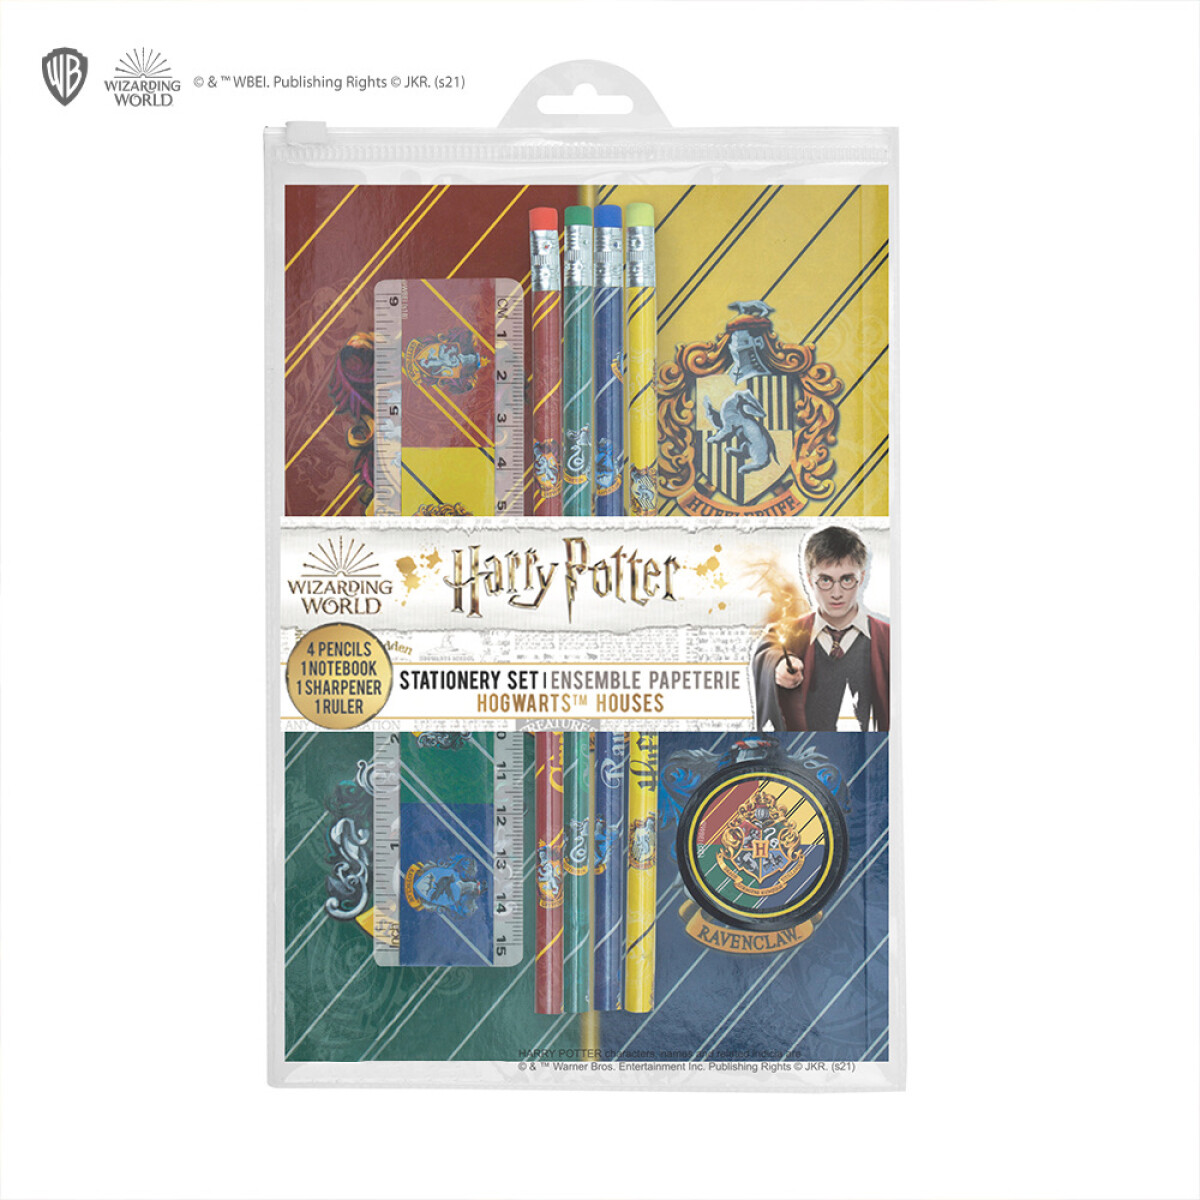 Harry Potter! Set Escolar - Hogwarts houses 